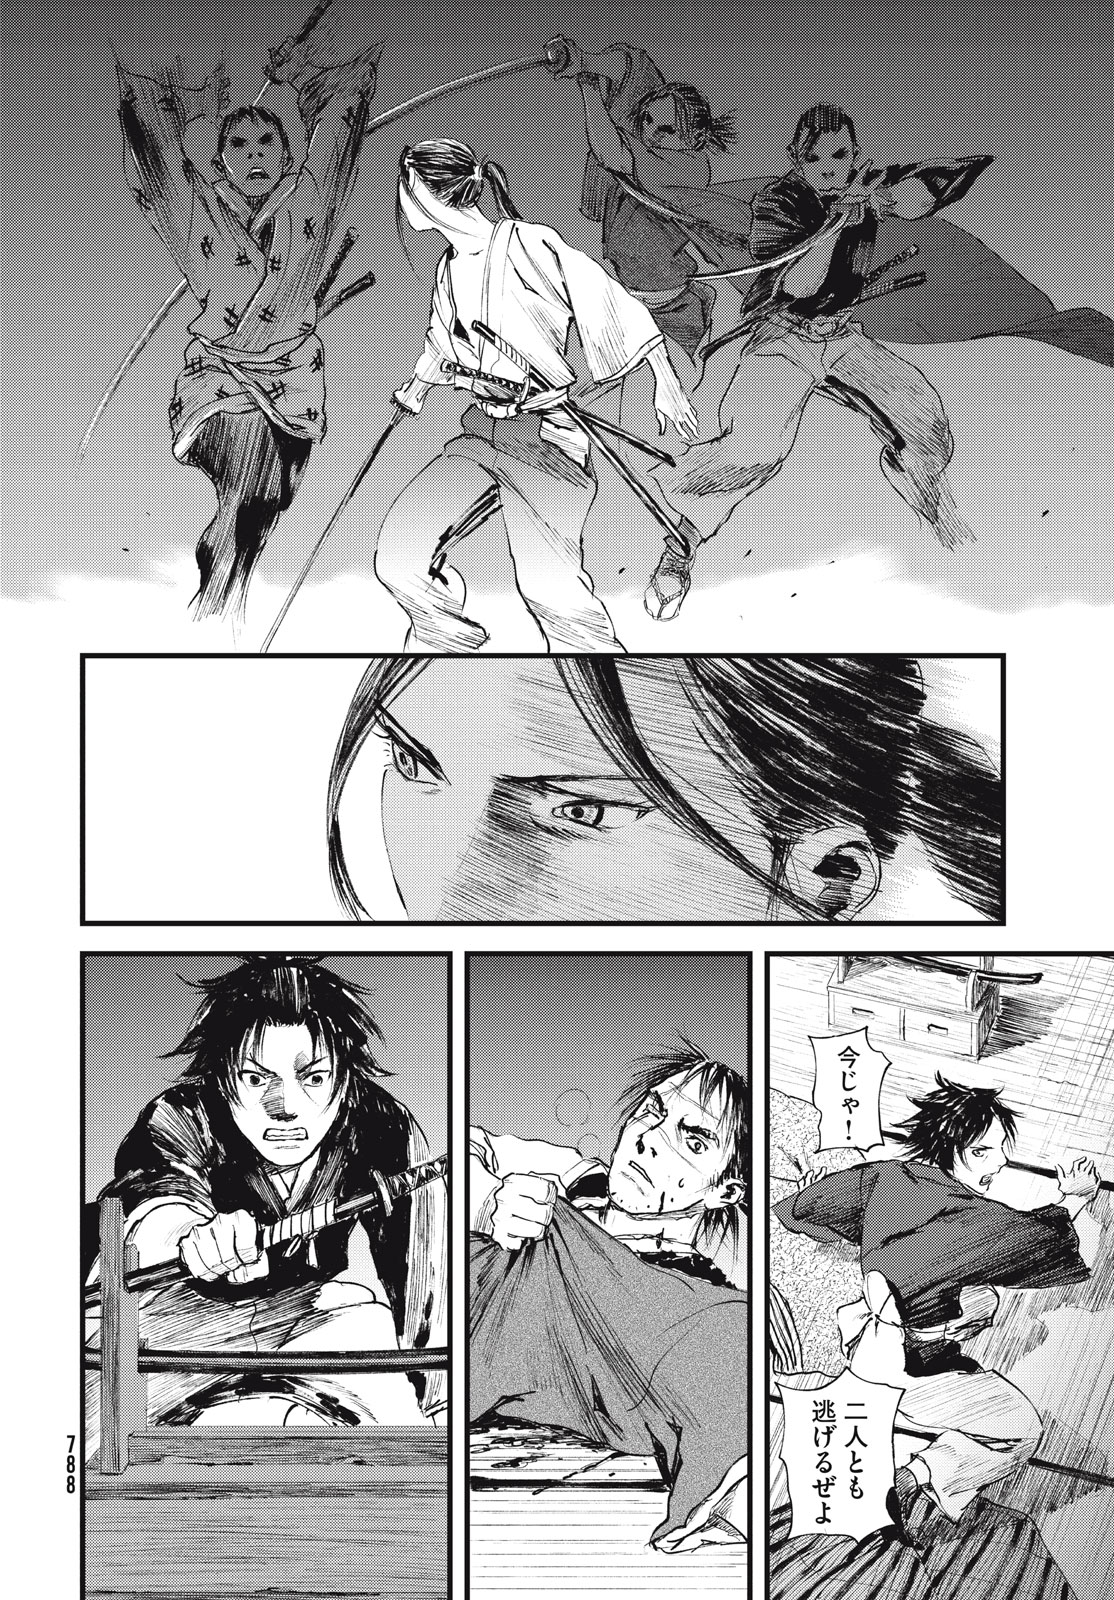 Blade of the Immortal: Bakumatsu Arc - Chapter 55 - Page 6